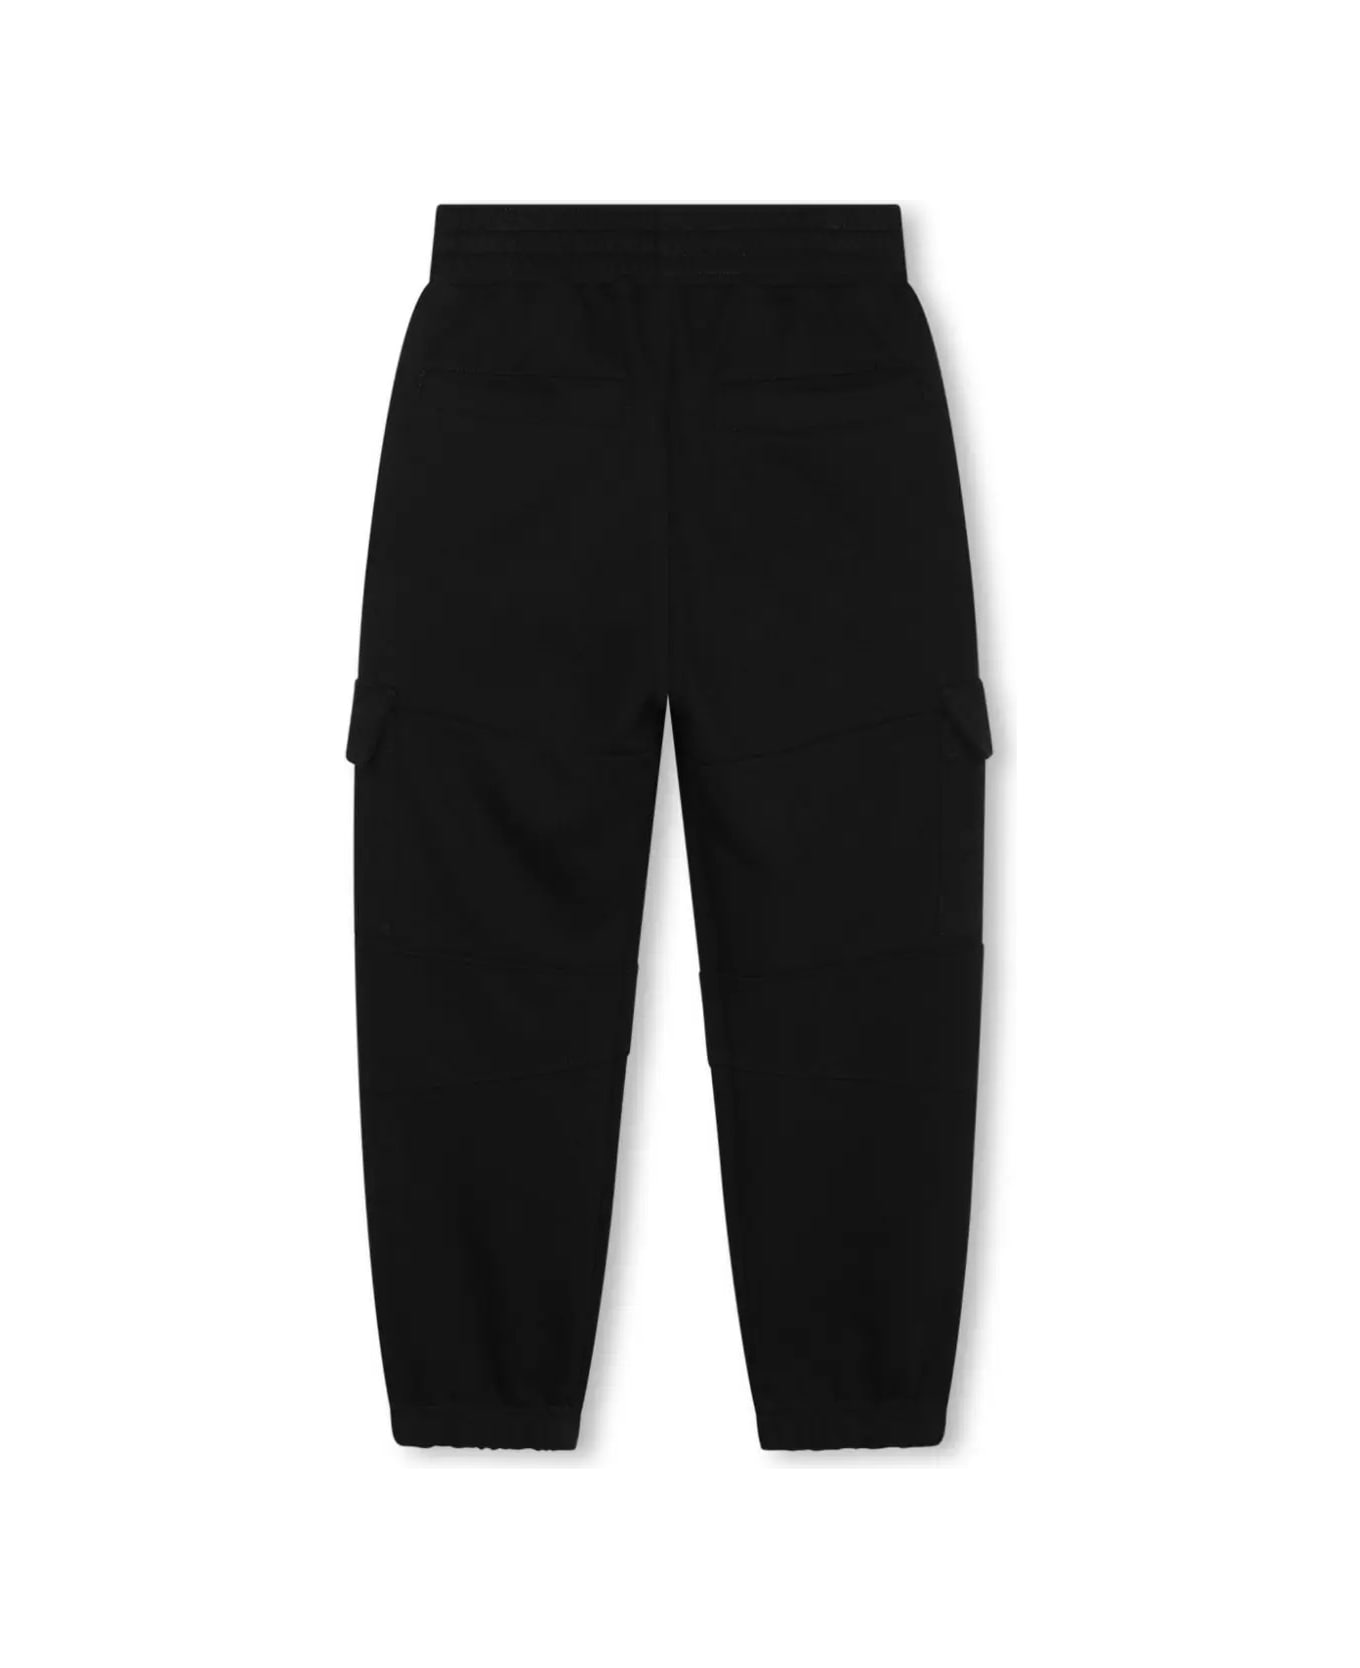 Givenchy Black Cargo Style Sports Pants - Black ボトムス